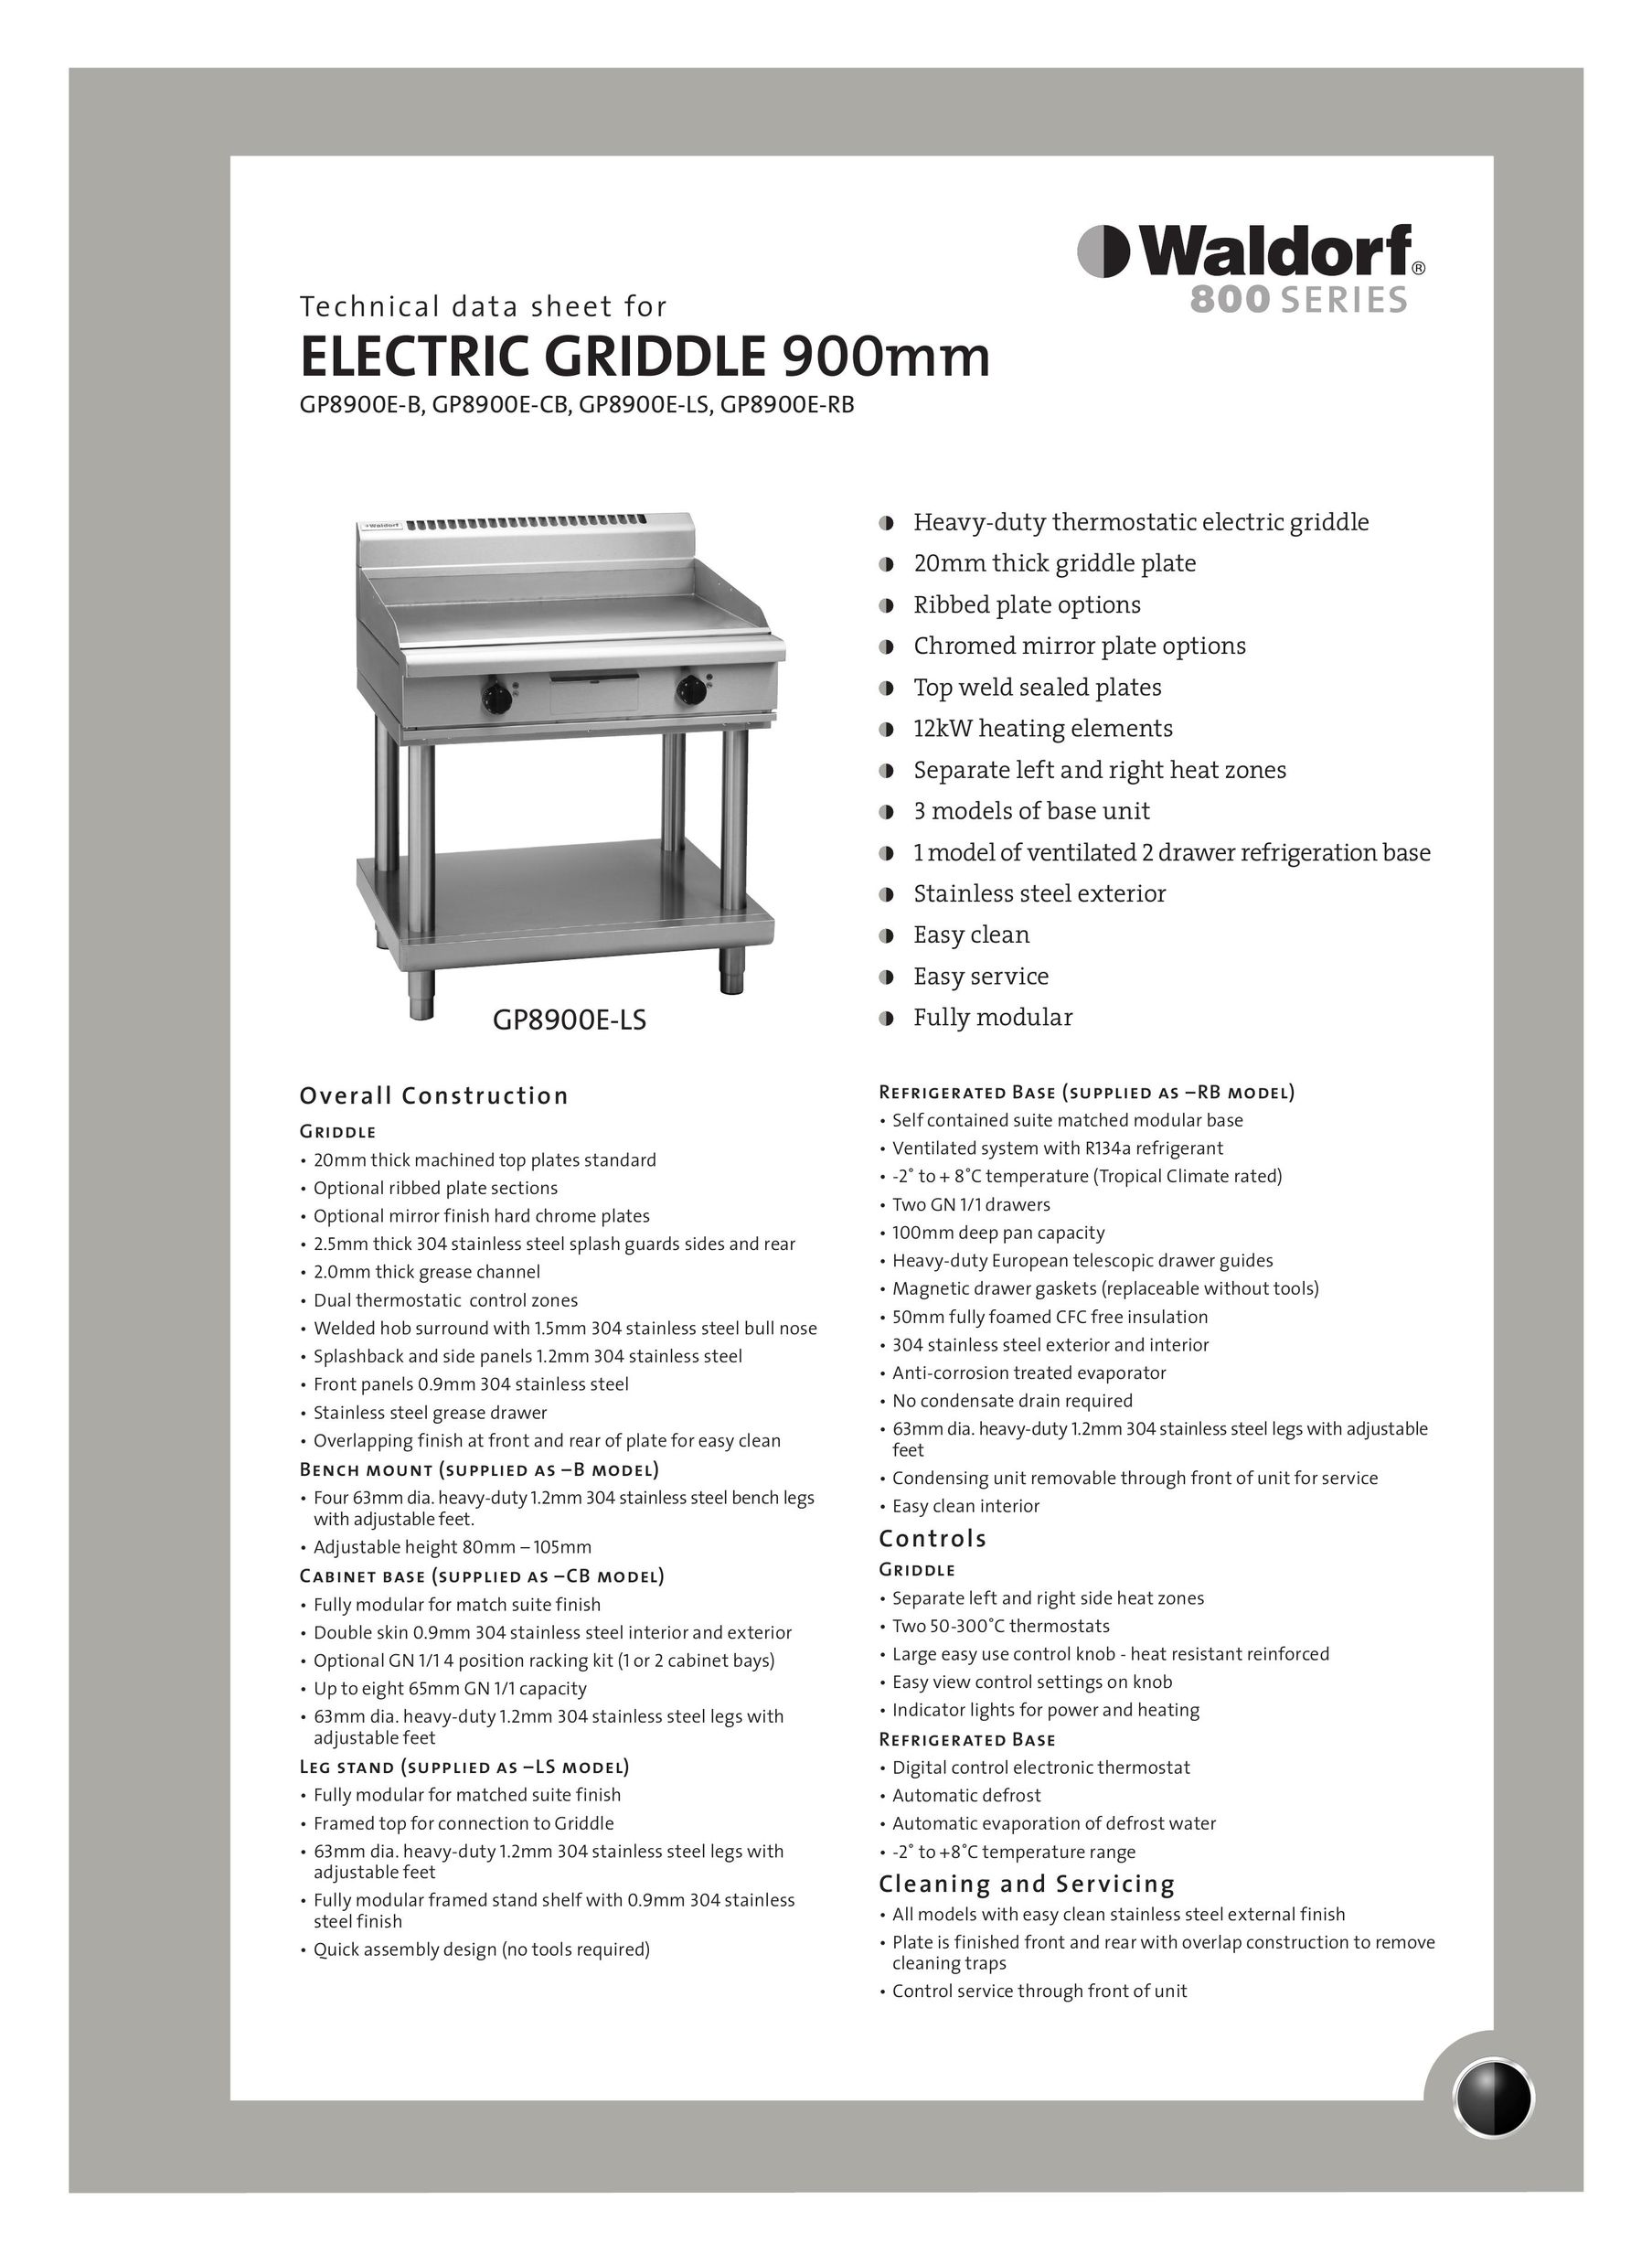 Moffat GP8900E-RB Griddle User Manual